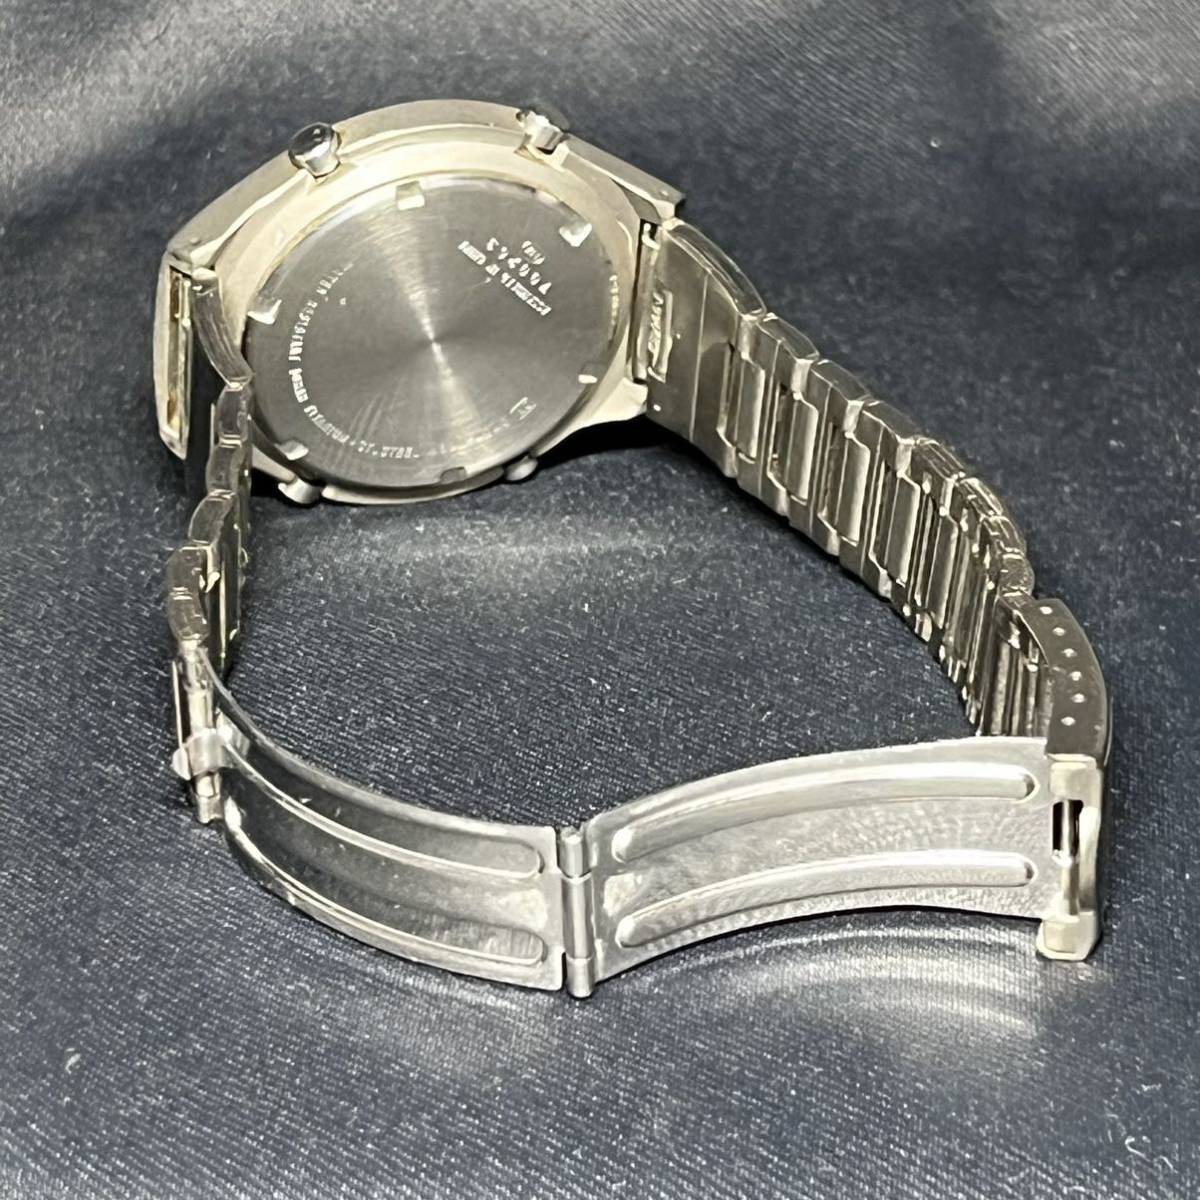 SEIKO ALBA セイコー アルバ EPSILON イプシロン メンズ腕時計 W820 